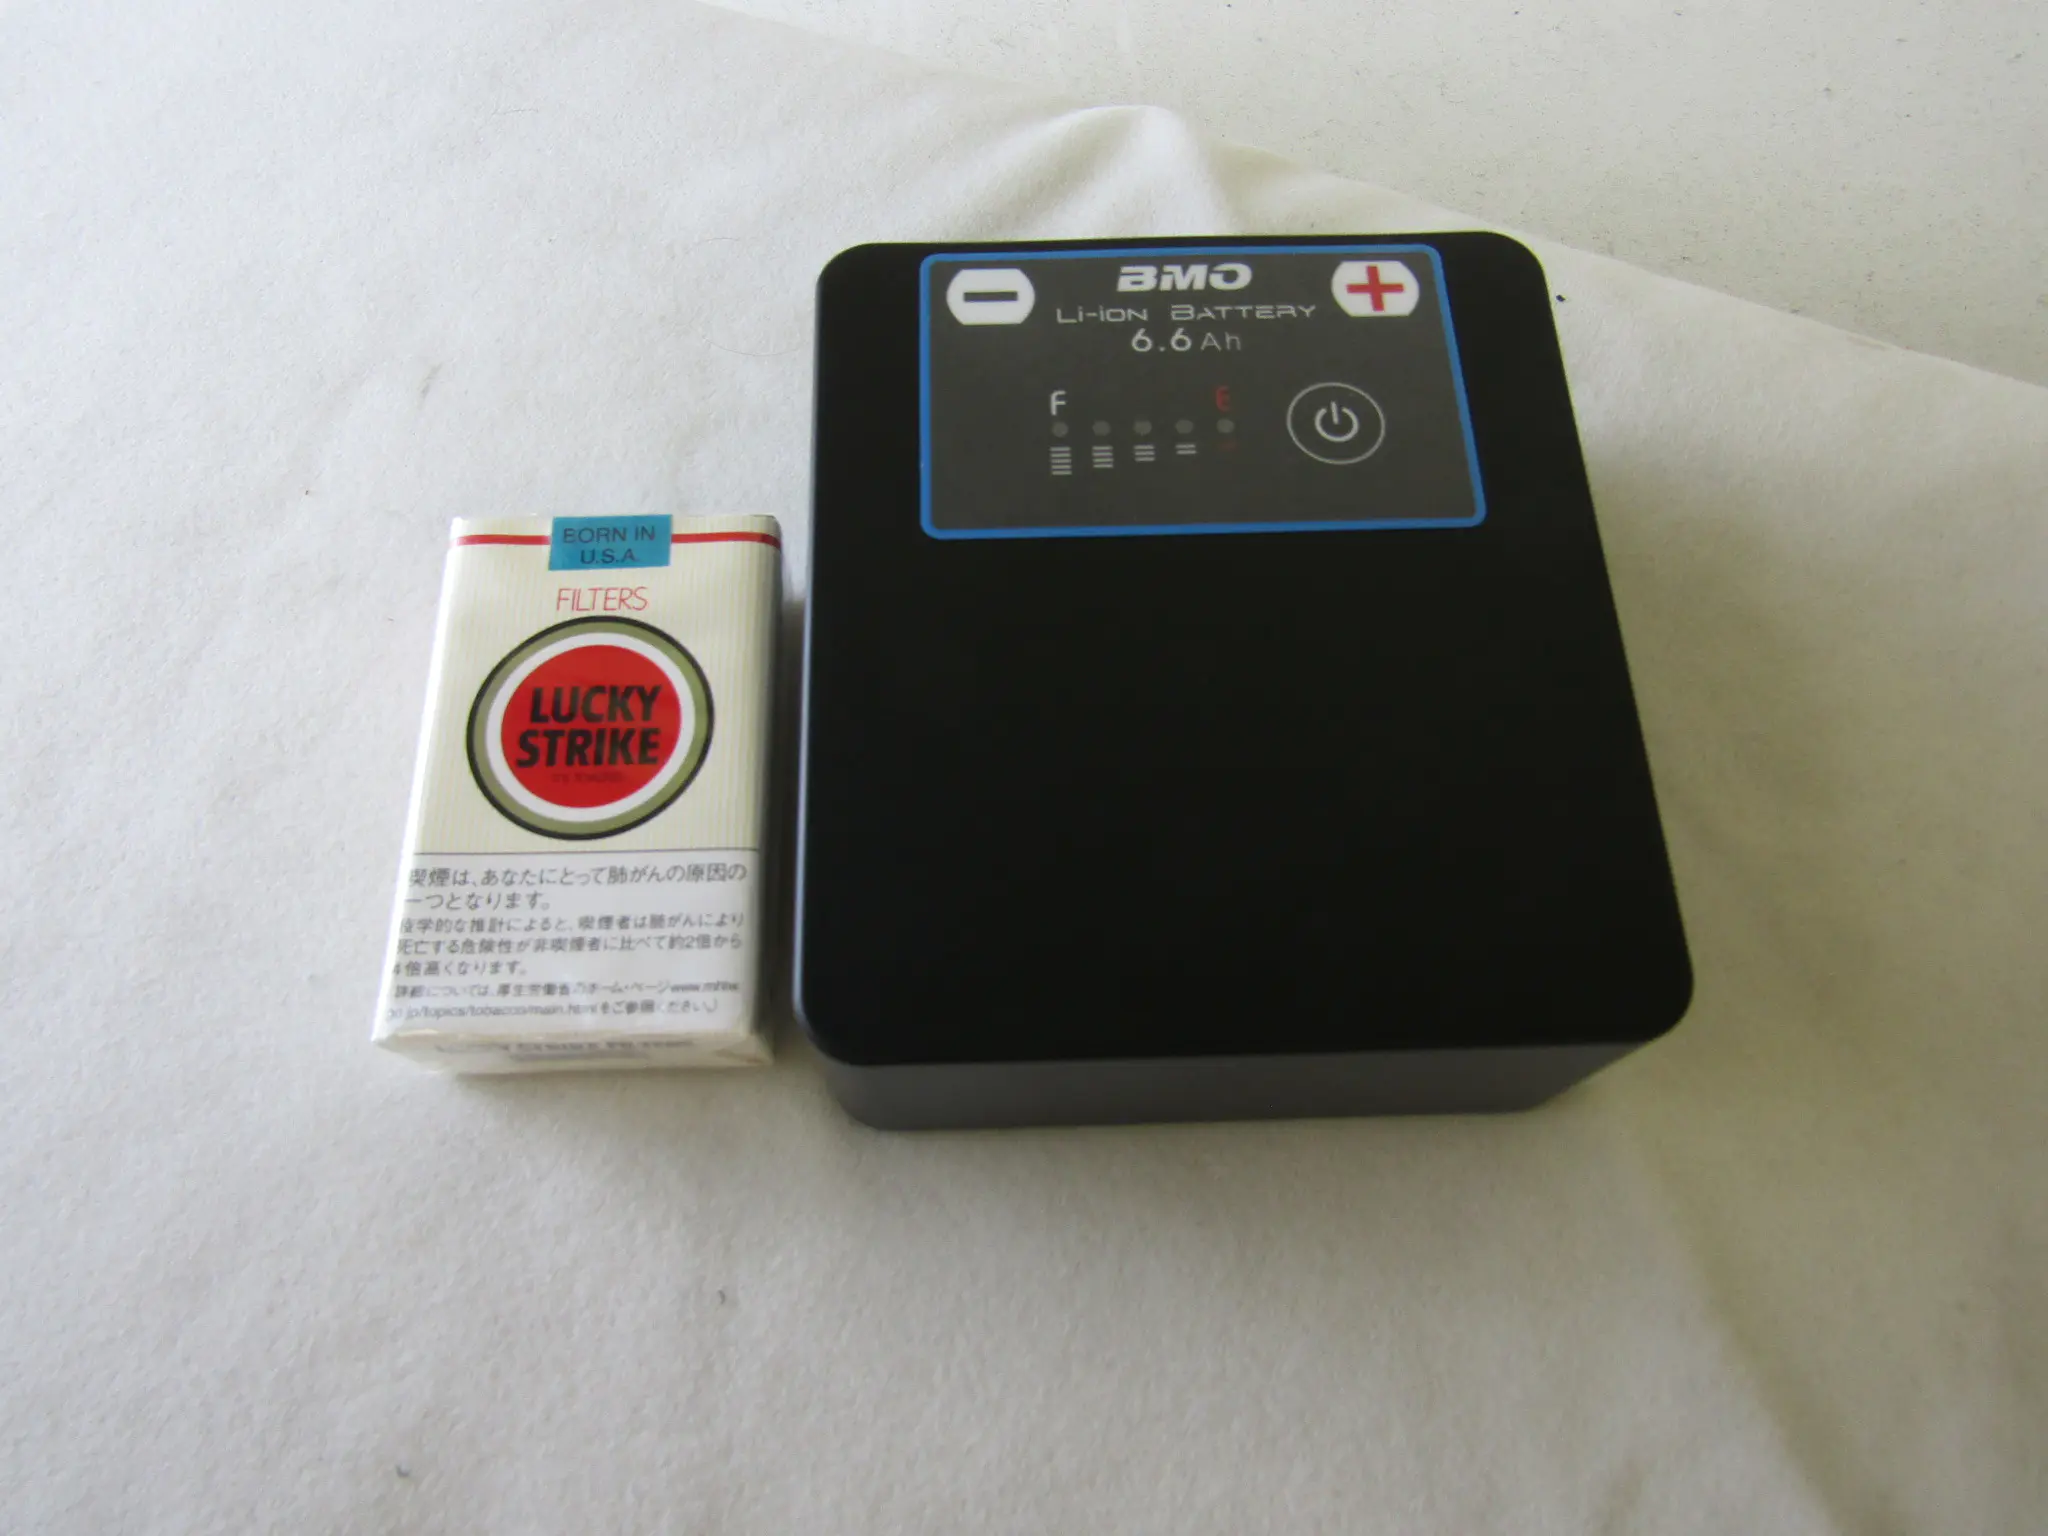 BMOリチウムイオンバッテリー6.6Ahチャージャーセット - 25,400円 : 海 